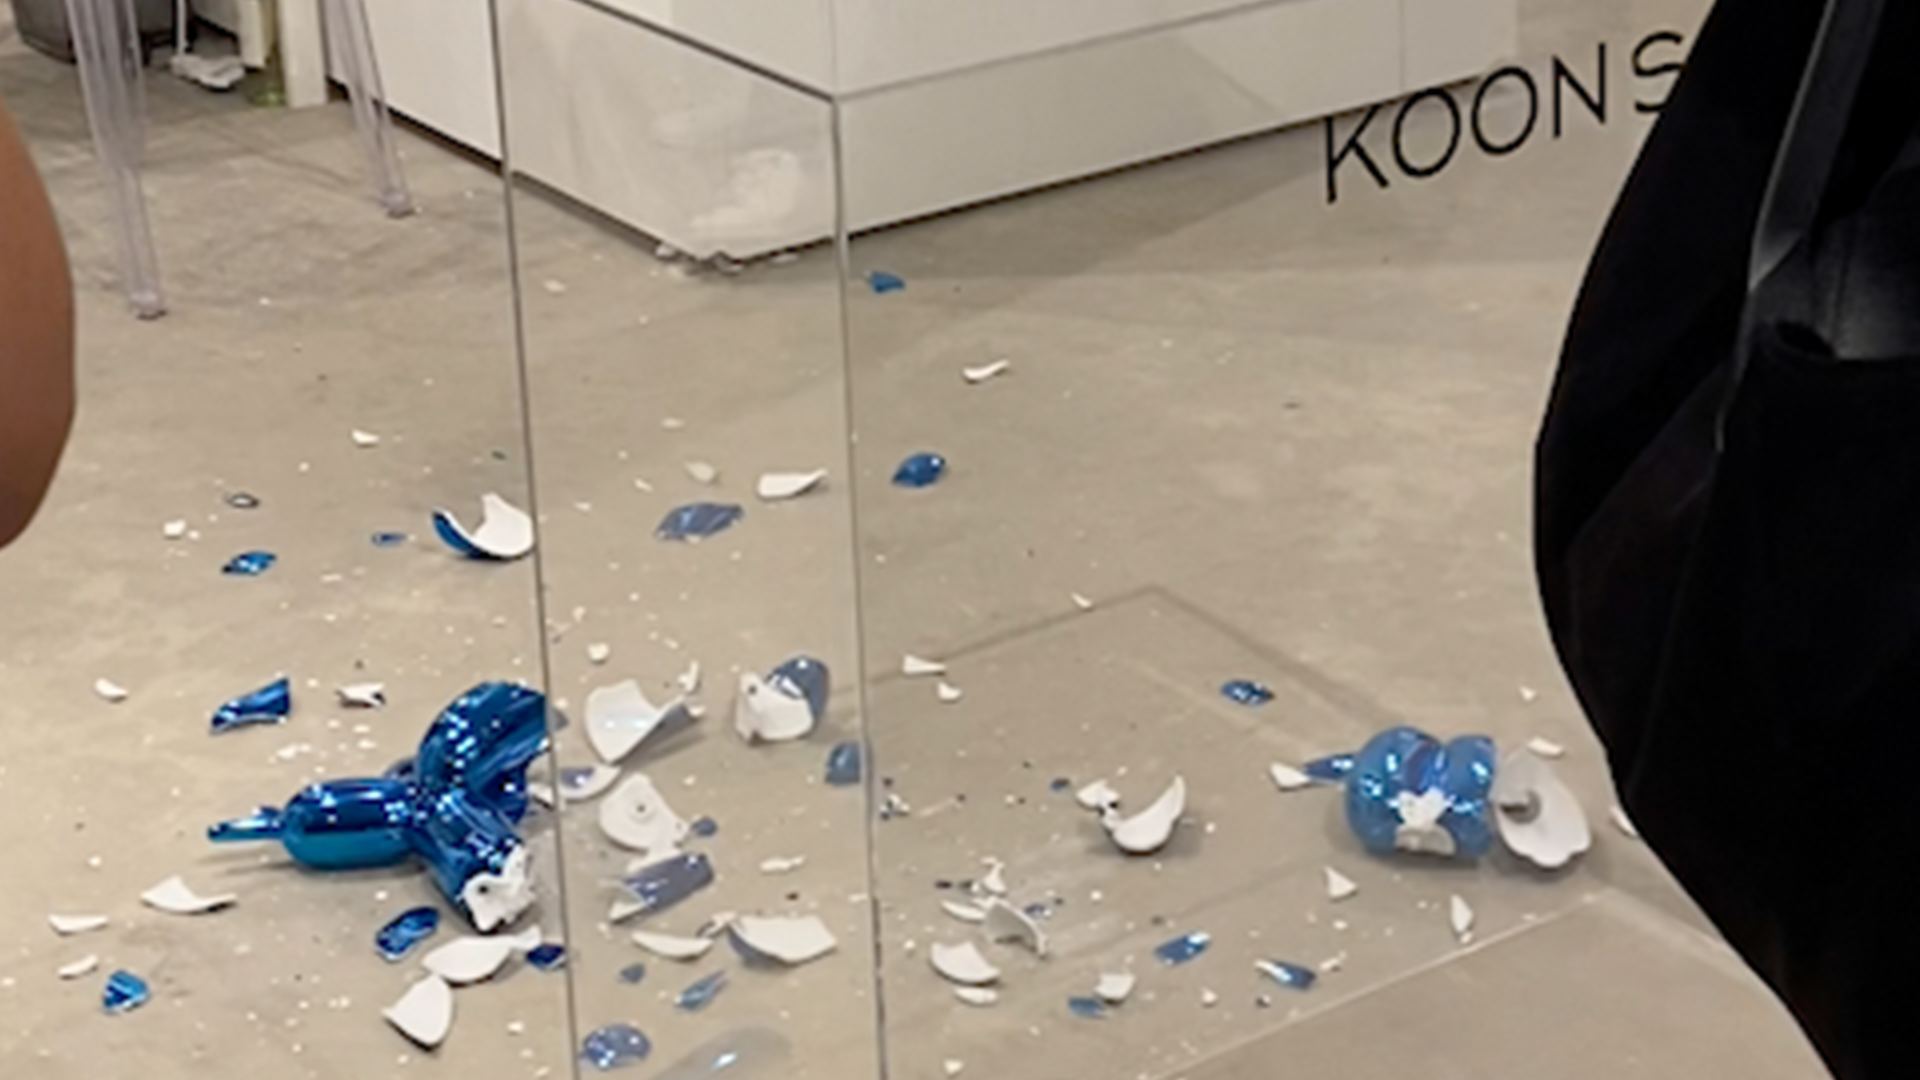 Jeff Koons' Rabbit sculpture breaks record for living artist - BBC